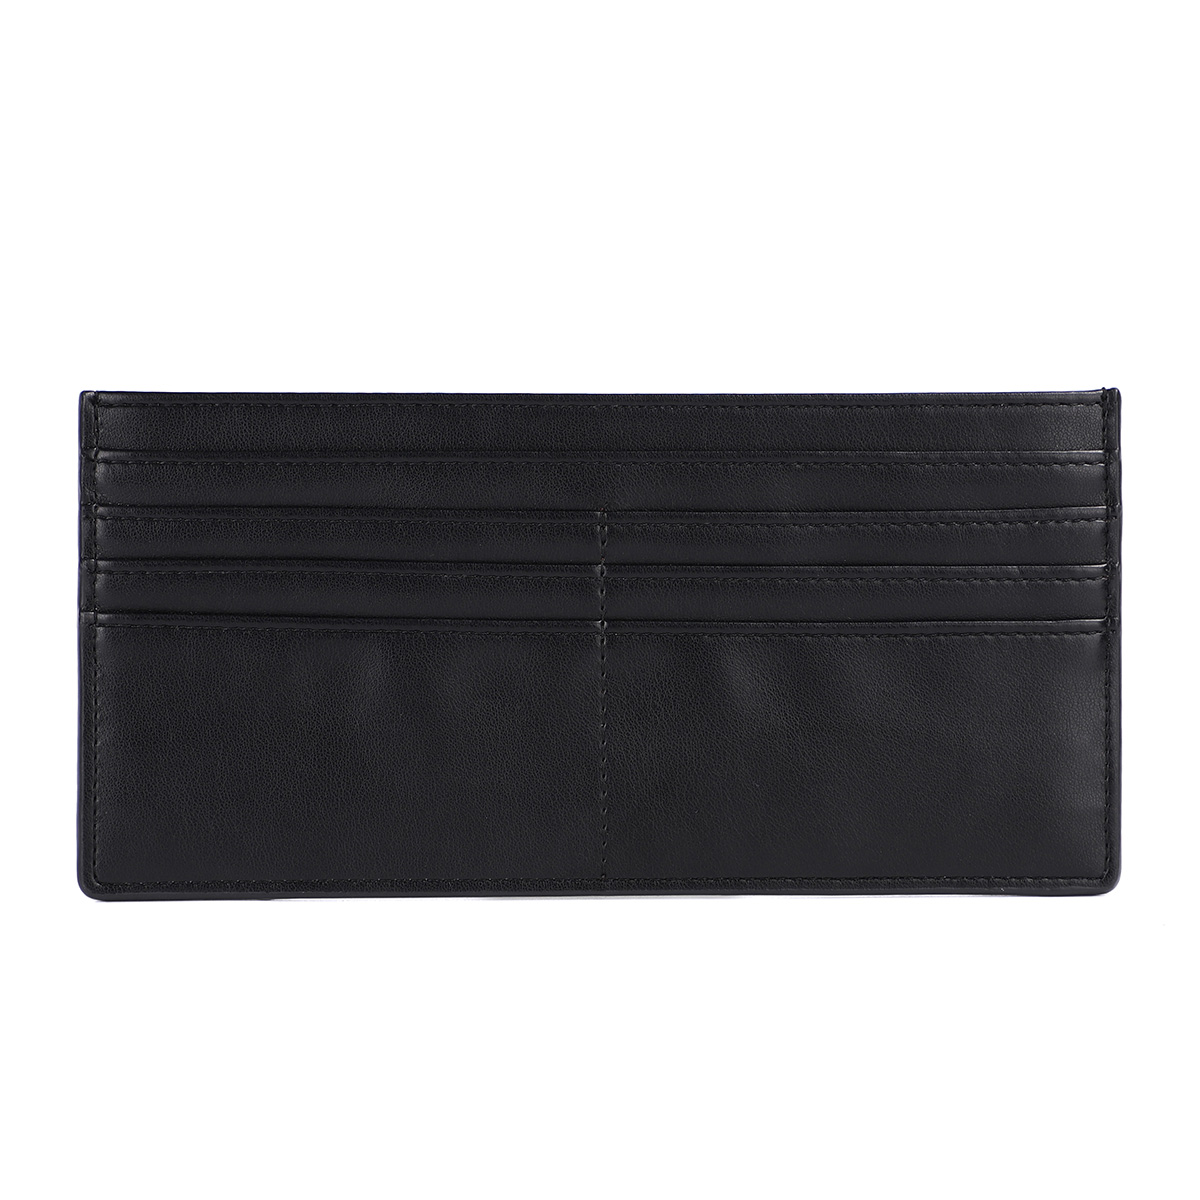 LIZDAYS 長財布 レディース フェイクレザー 薄い 軽い スリム スキミング防止 財布 財布